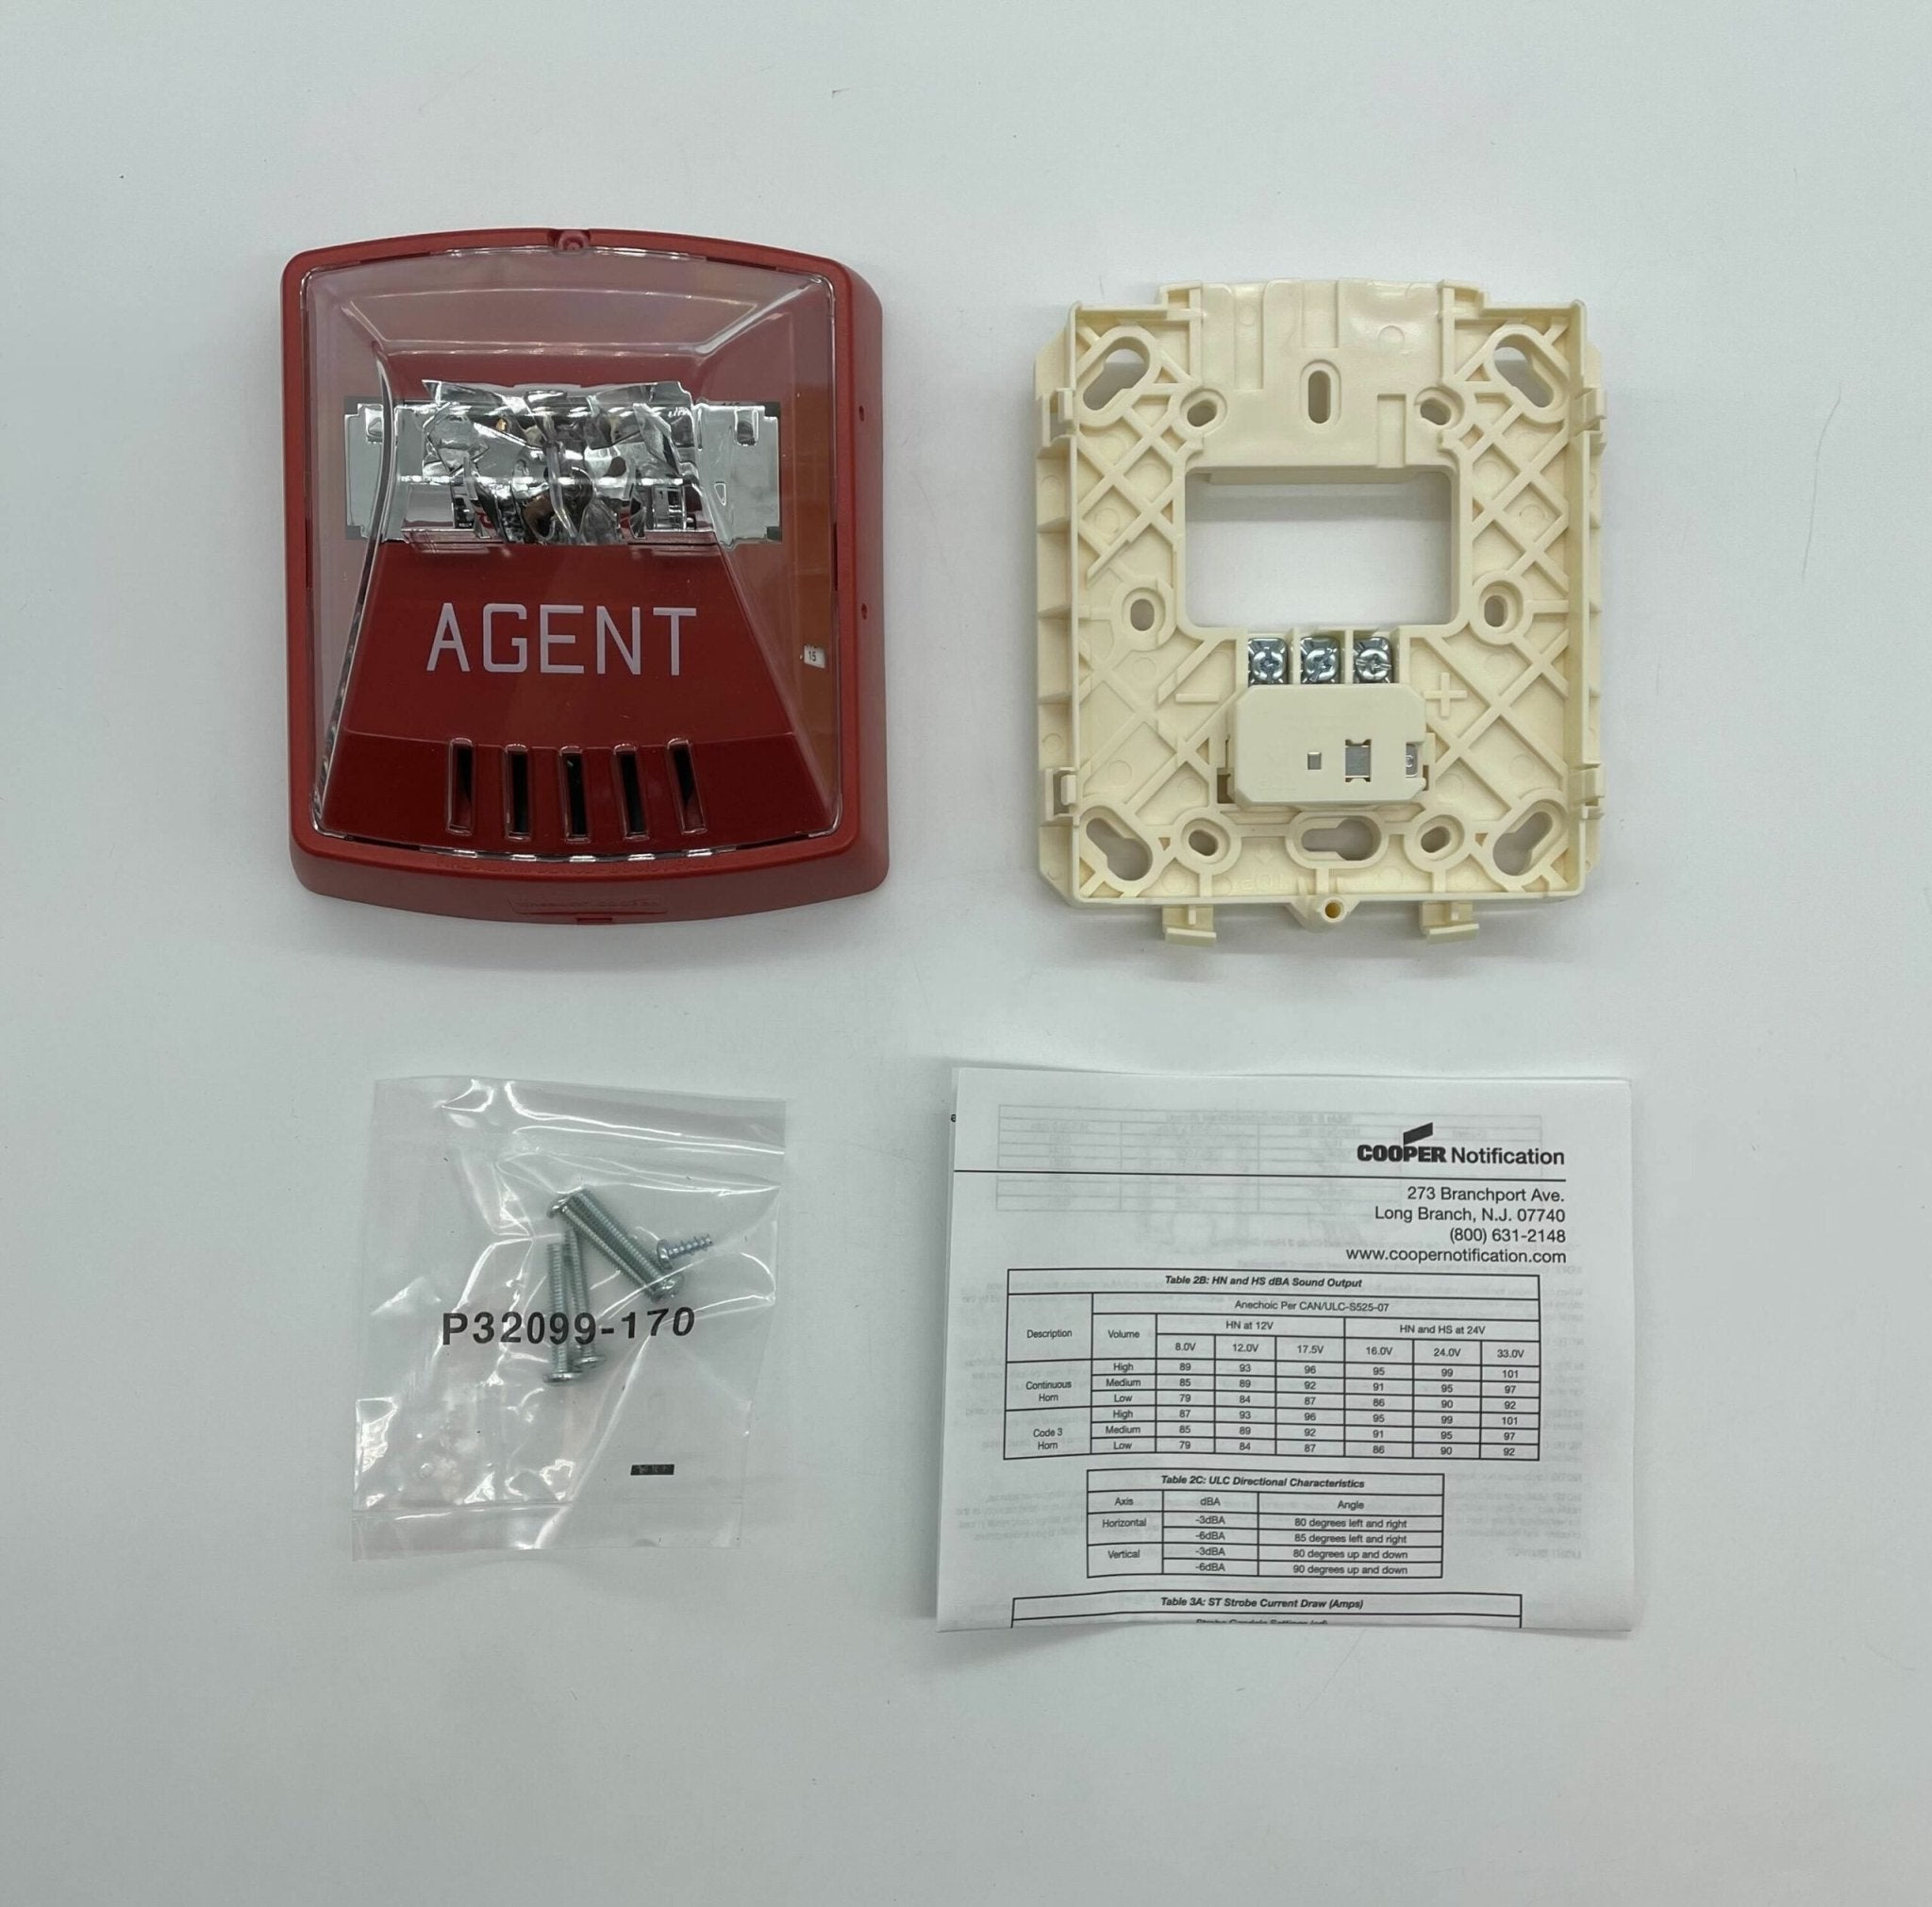 Wheelock HSR-A - The Fire Alarm Supplier